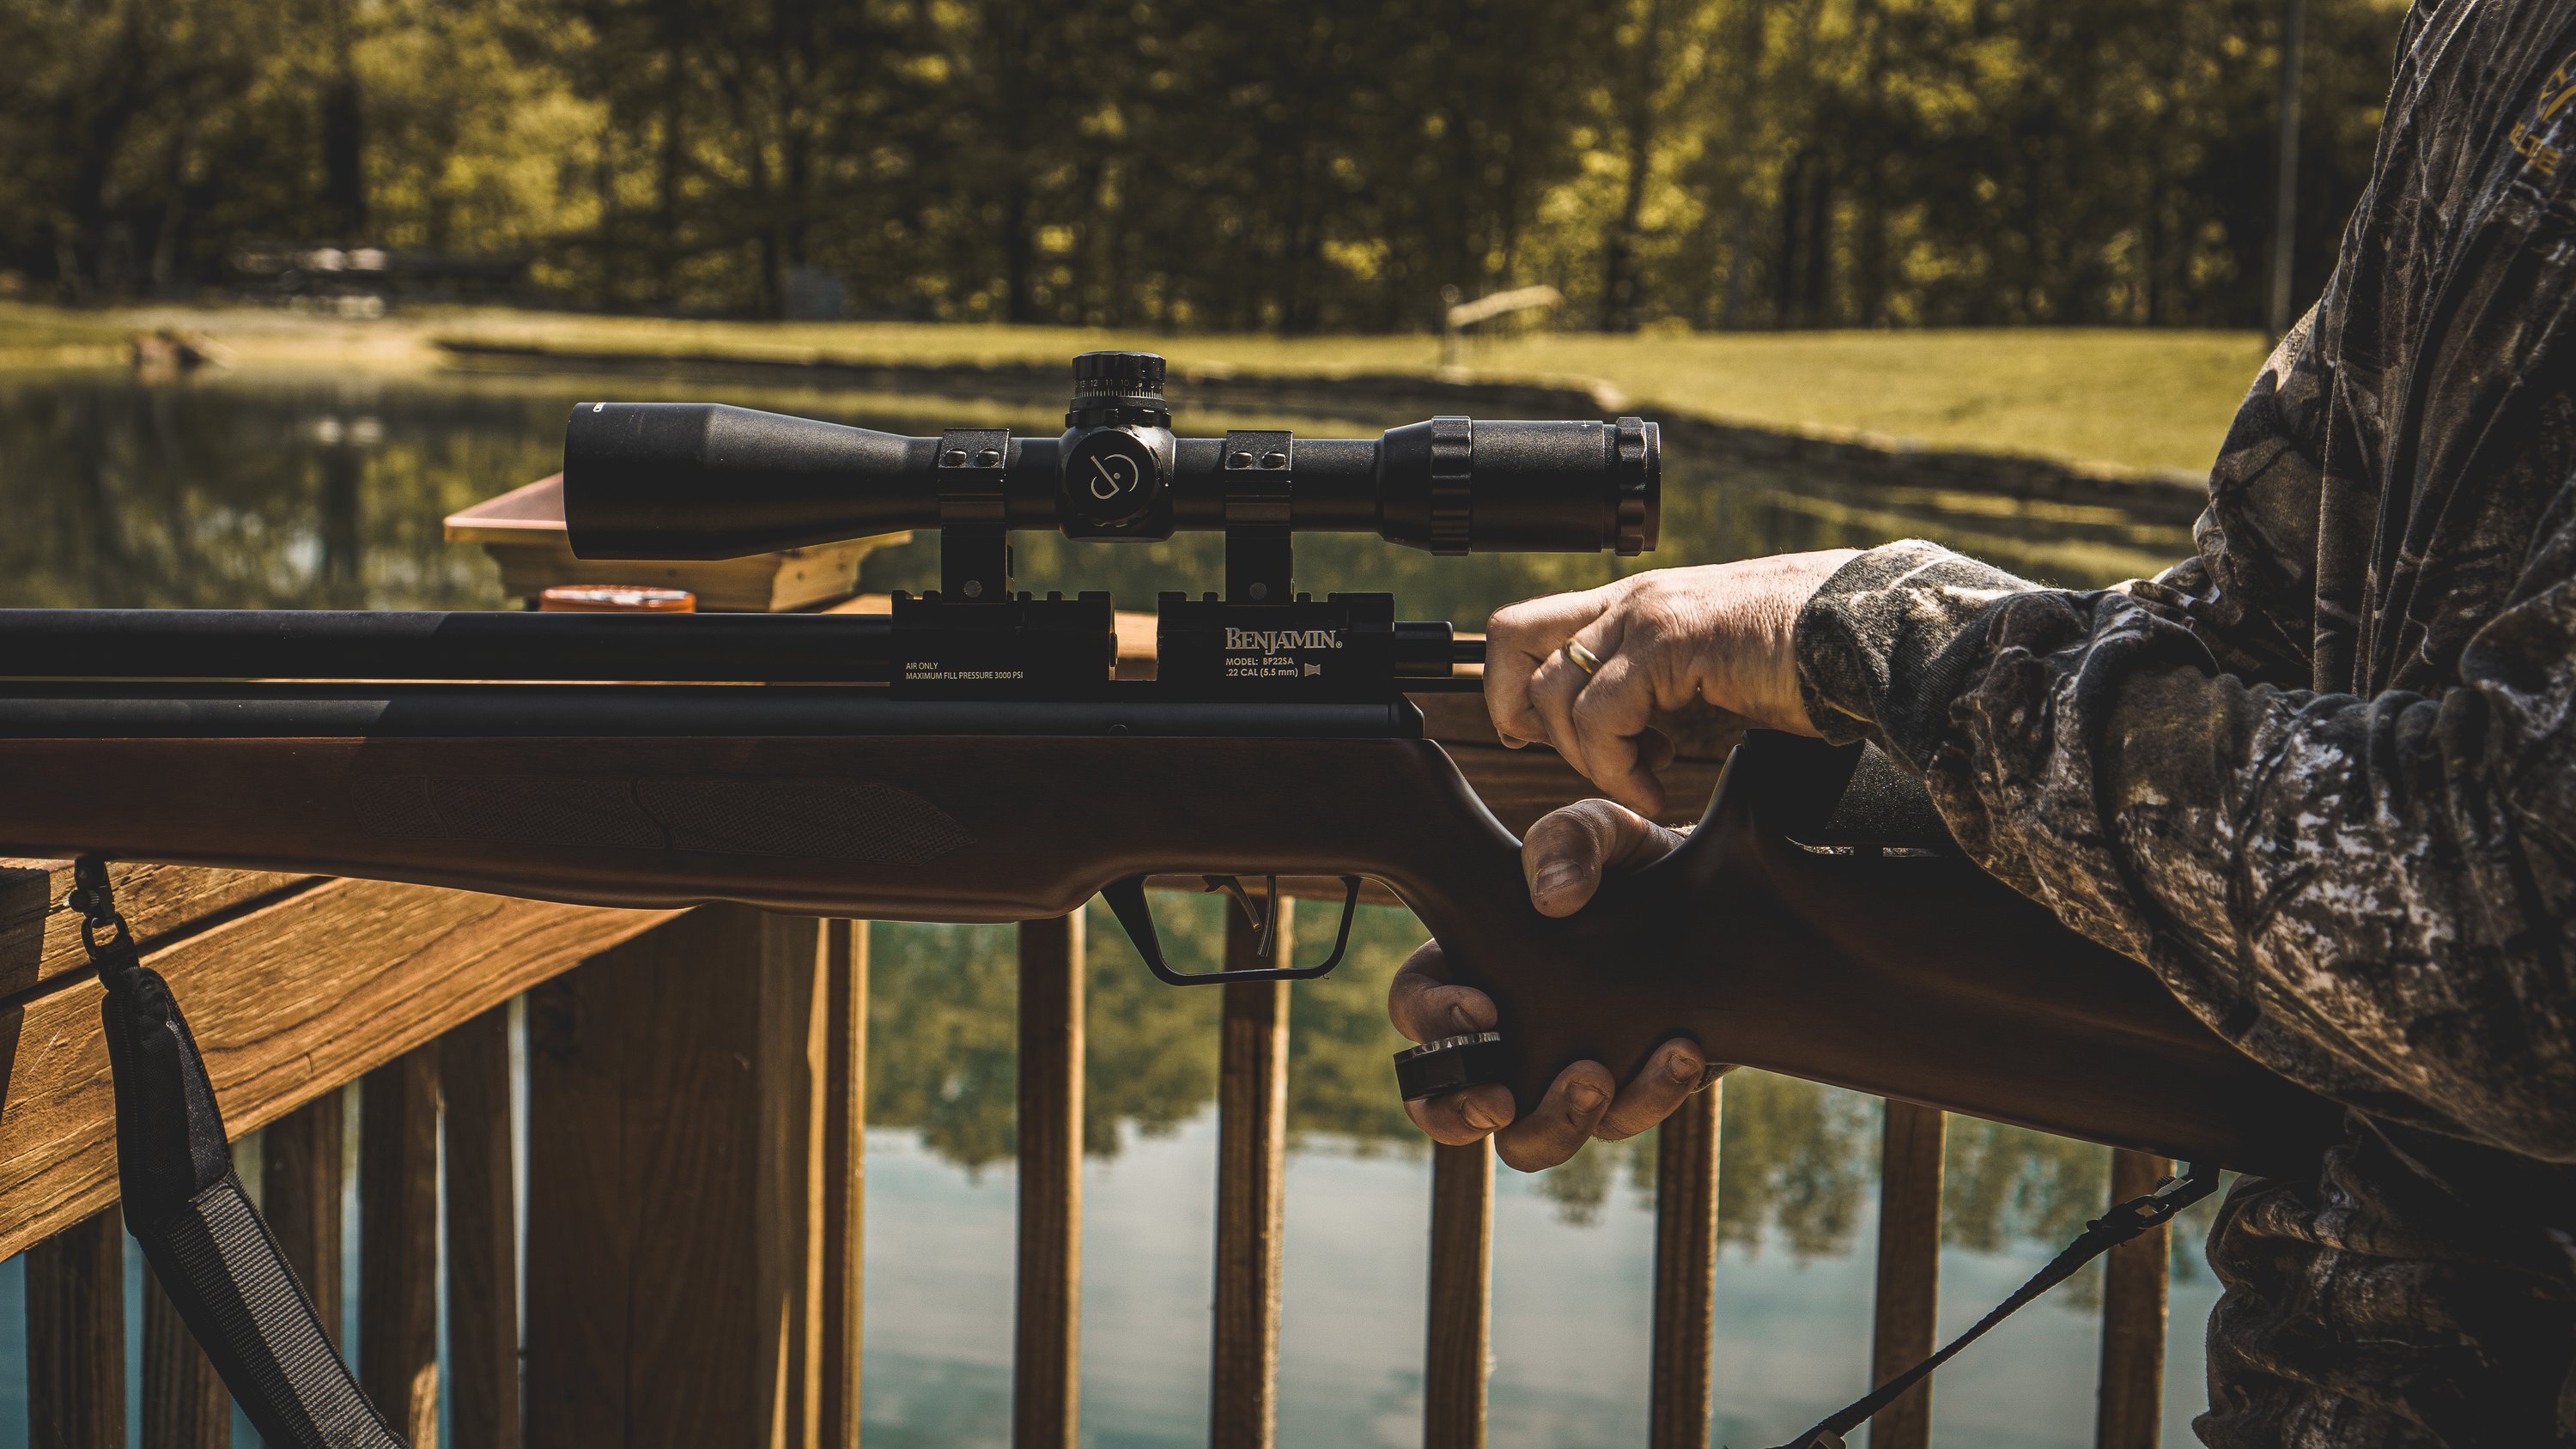 A hunter preparing to shoot a Benjamin Marauder air rifle